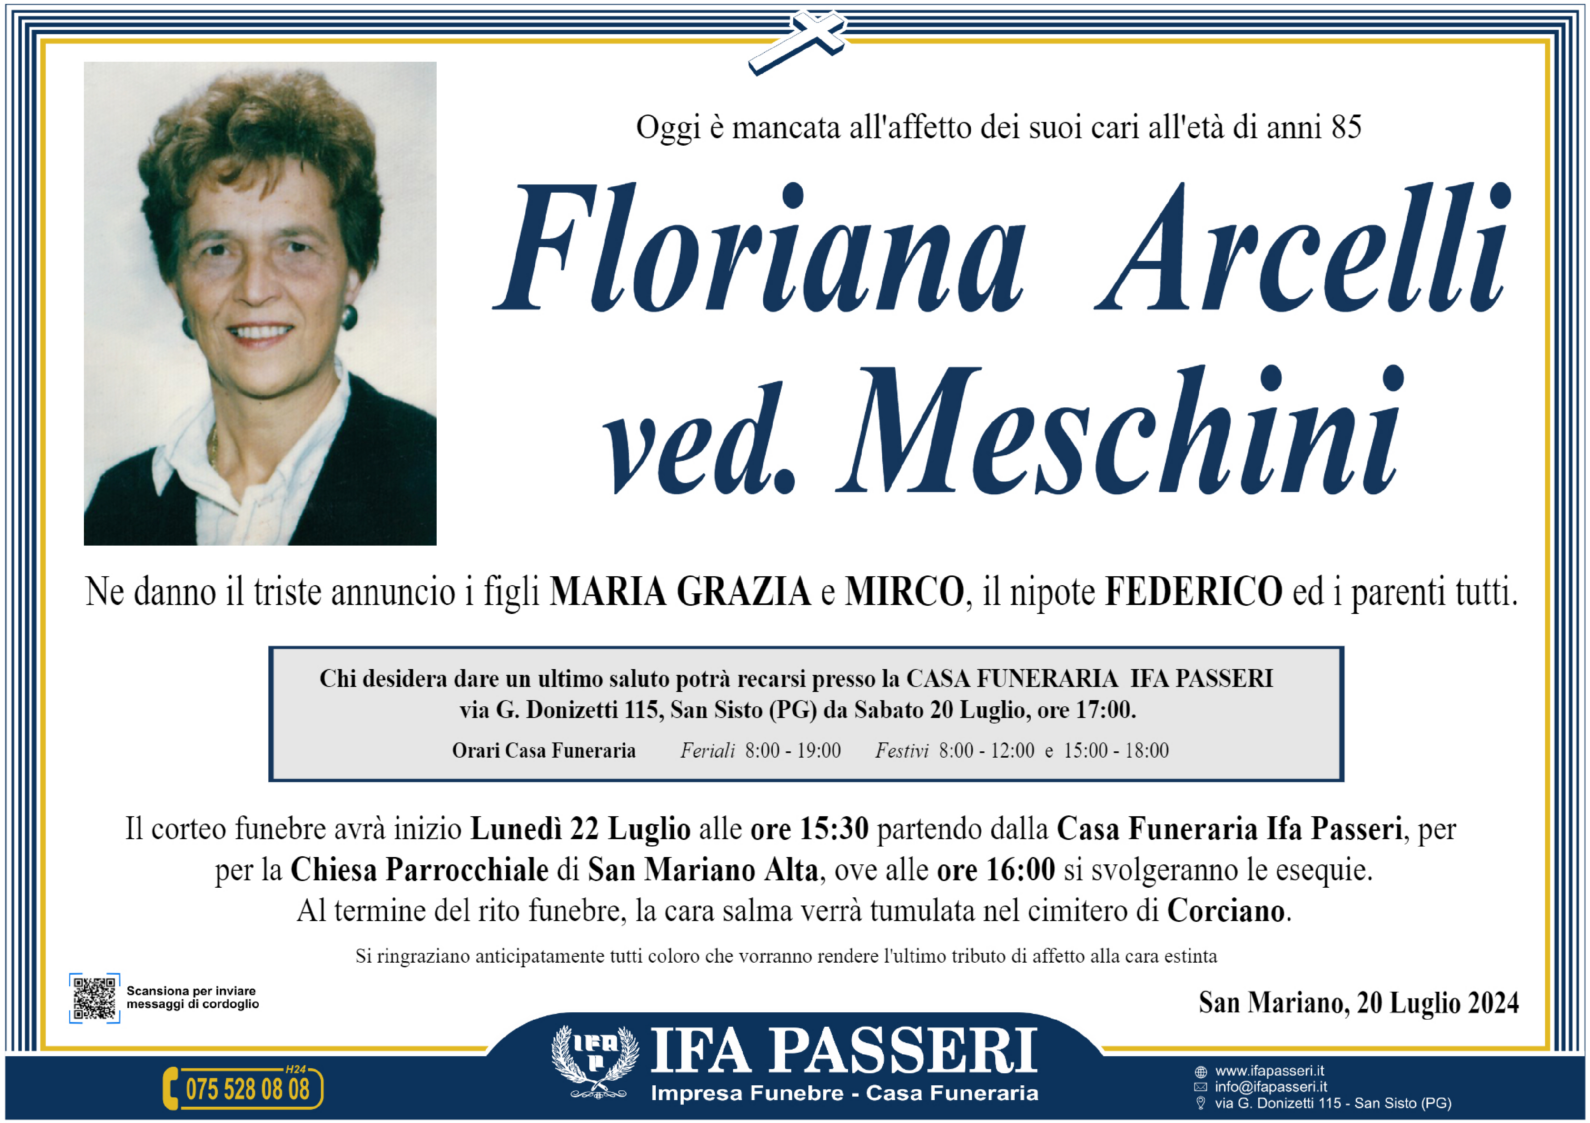 Floriana Arcelli ved. Meschini